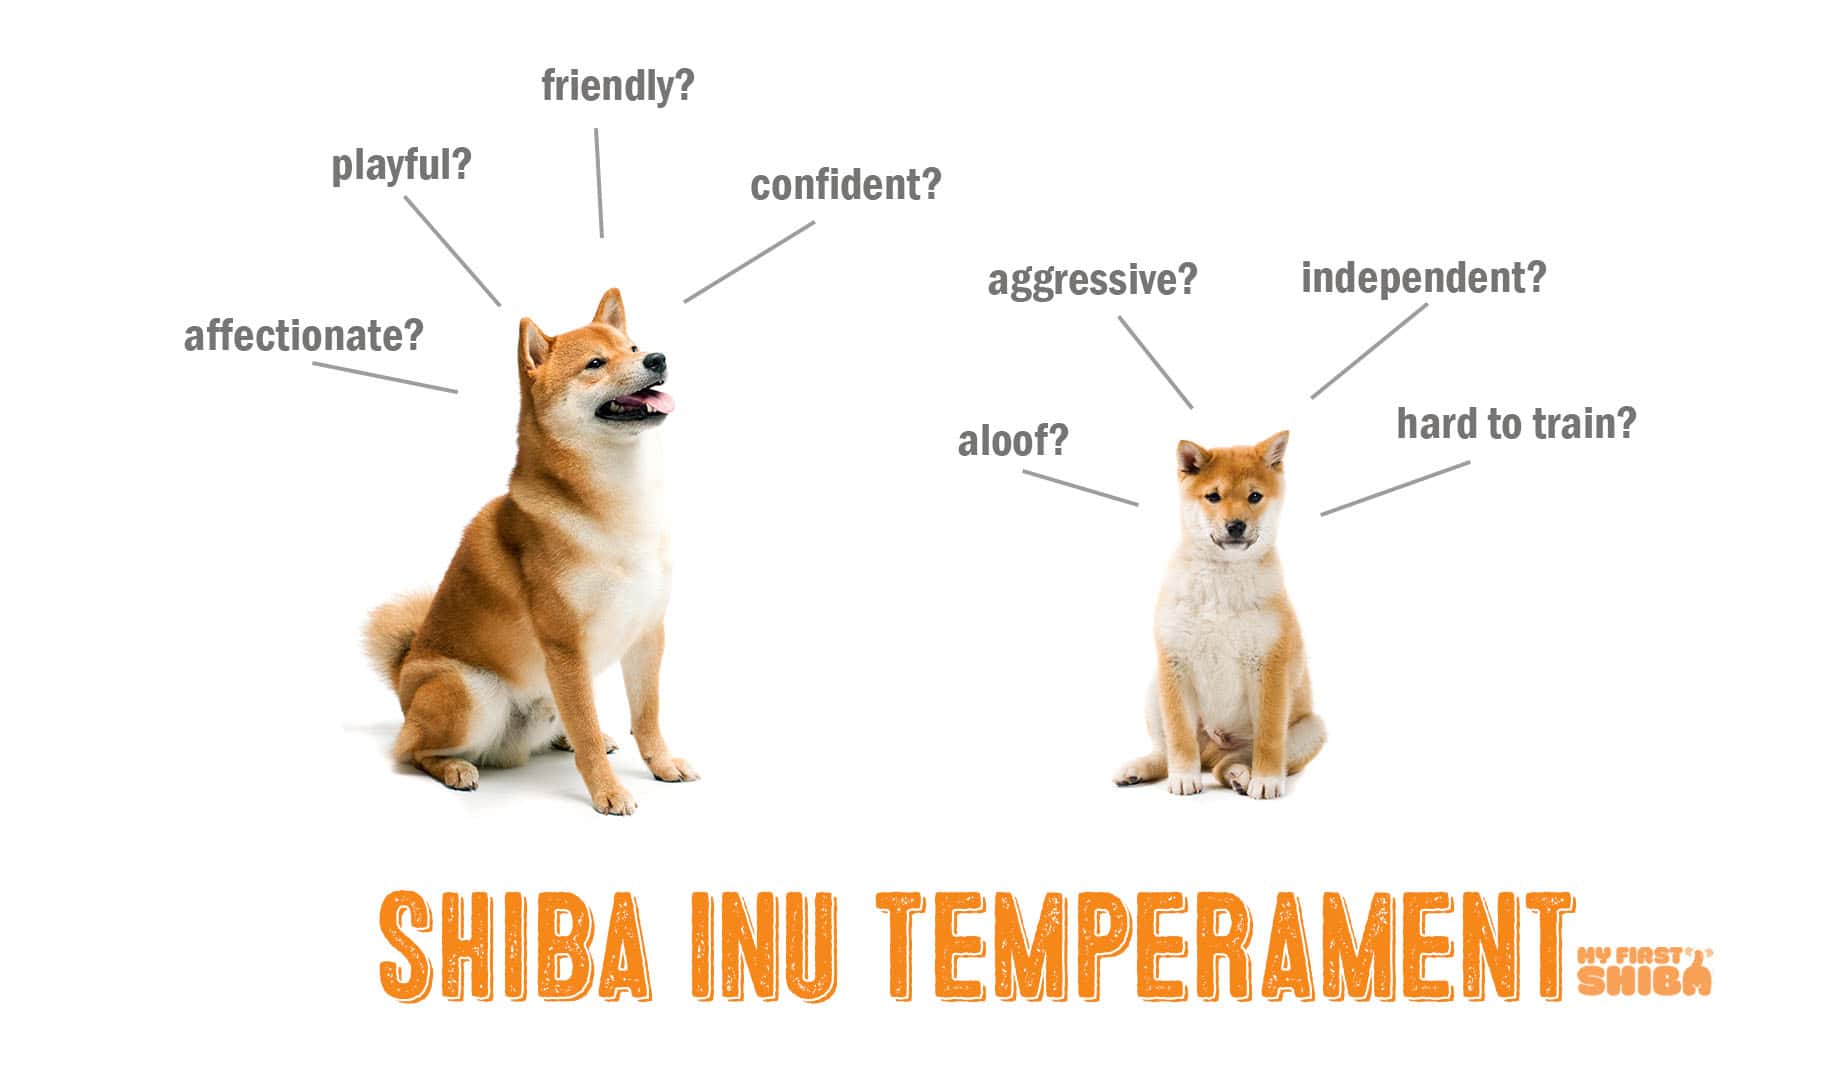 shiba inu temperament infographic